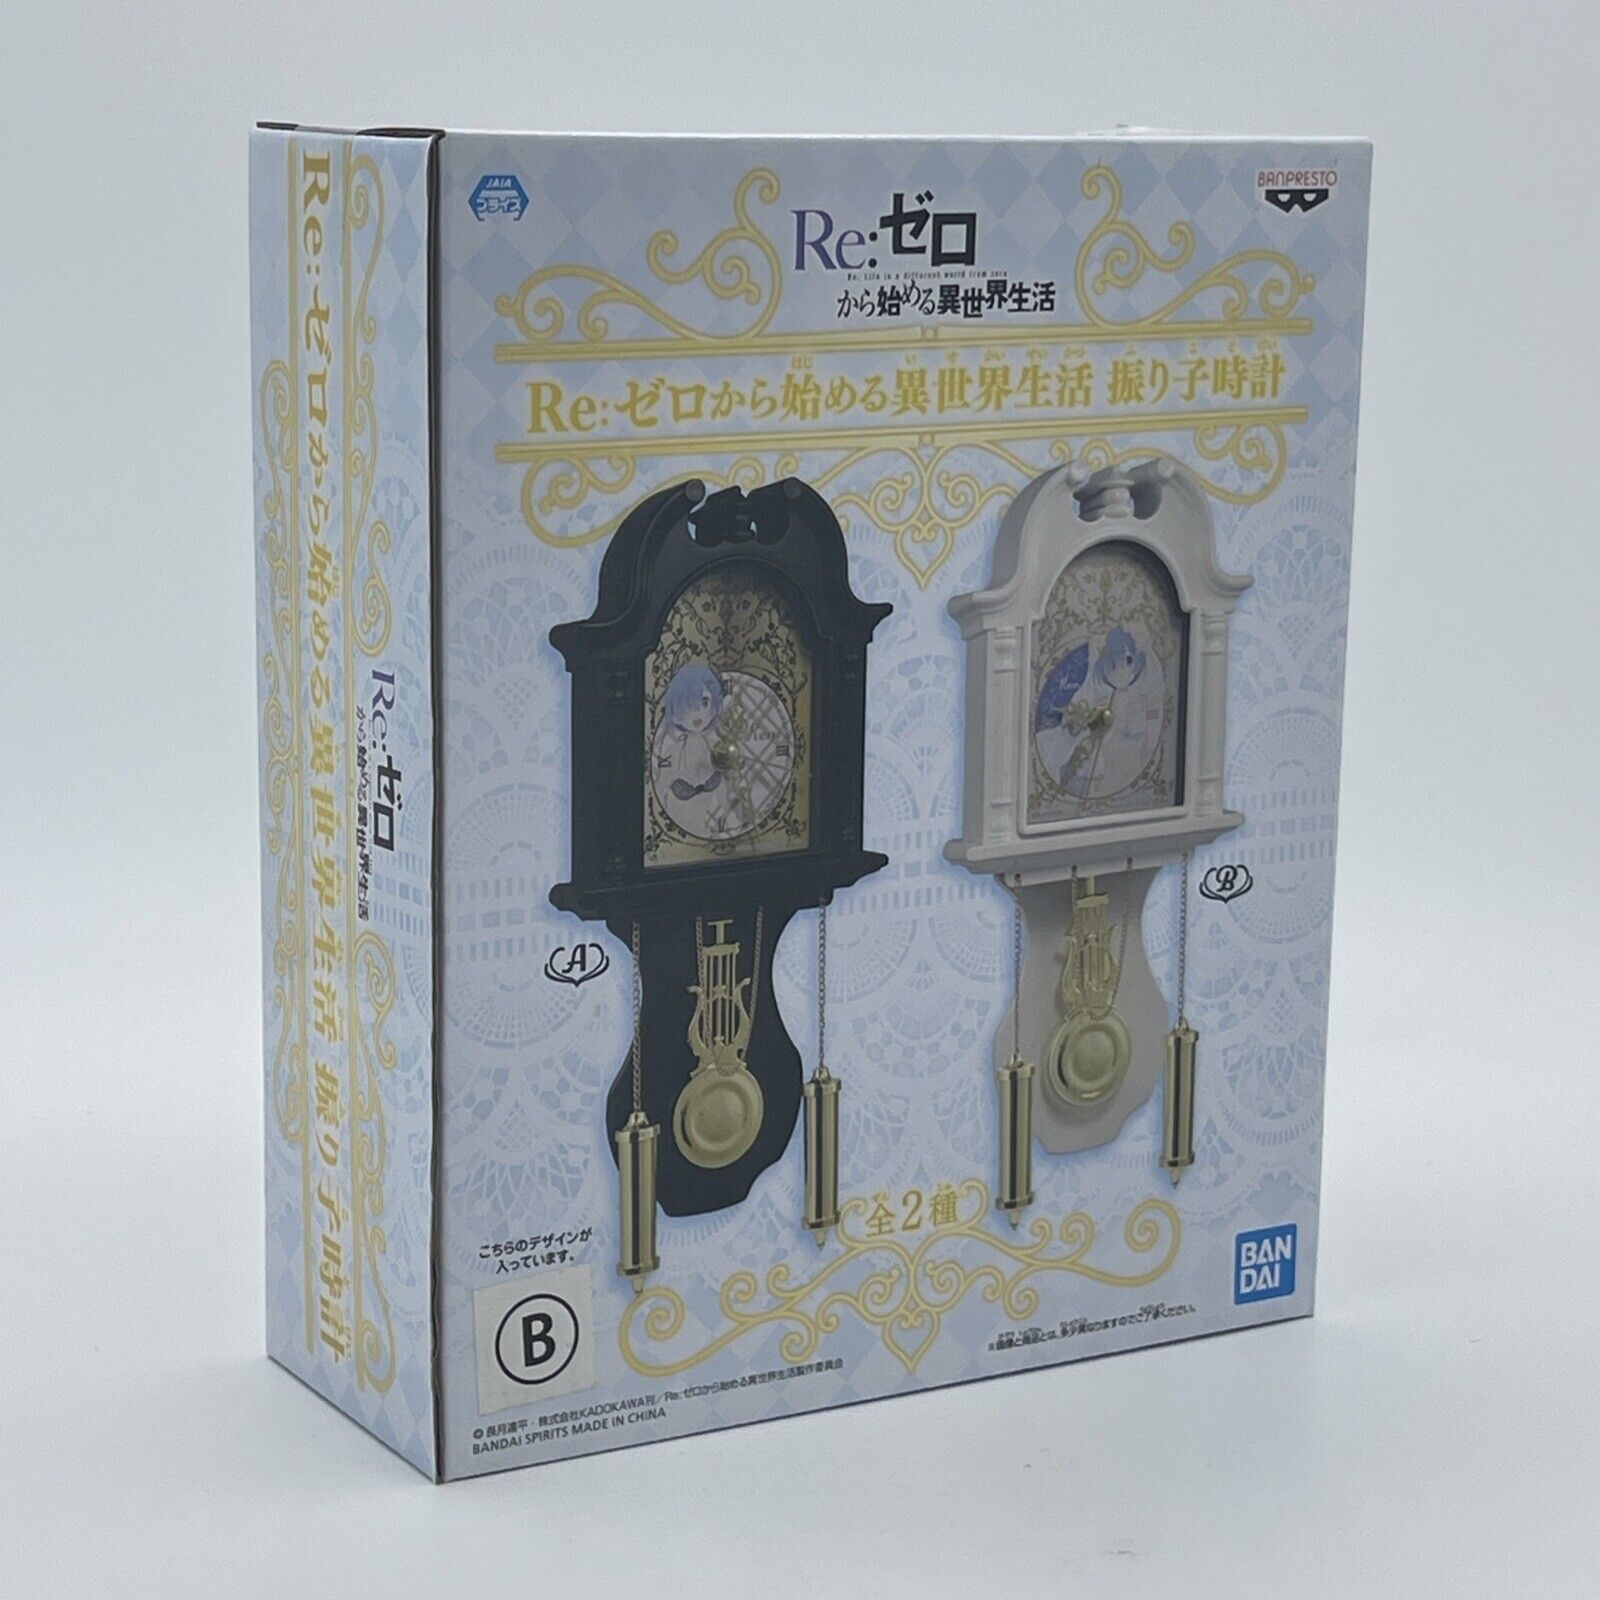 BANDAI Re:Zero Pendulum clock - Version B - White Limited Quantity & Edition Rem